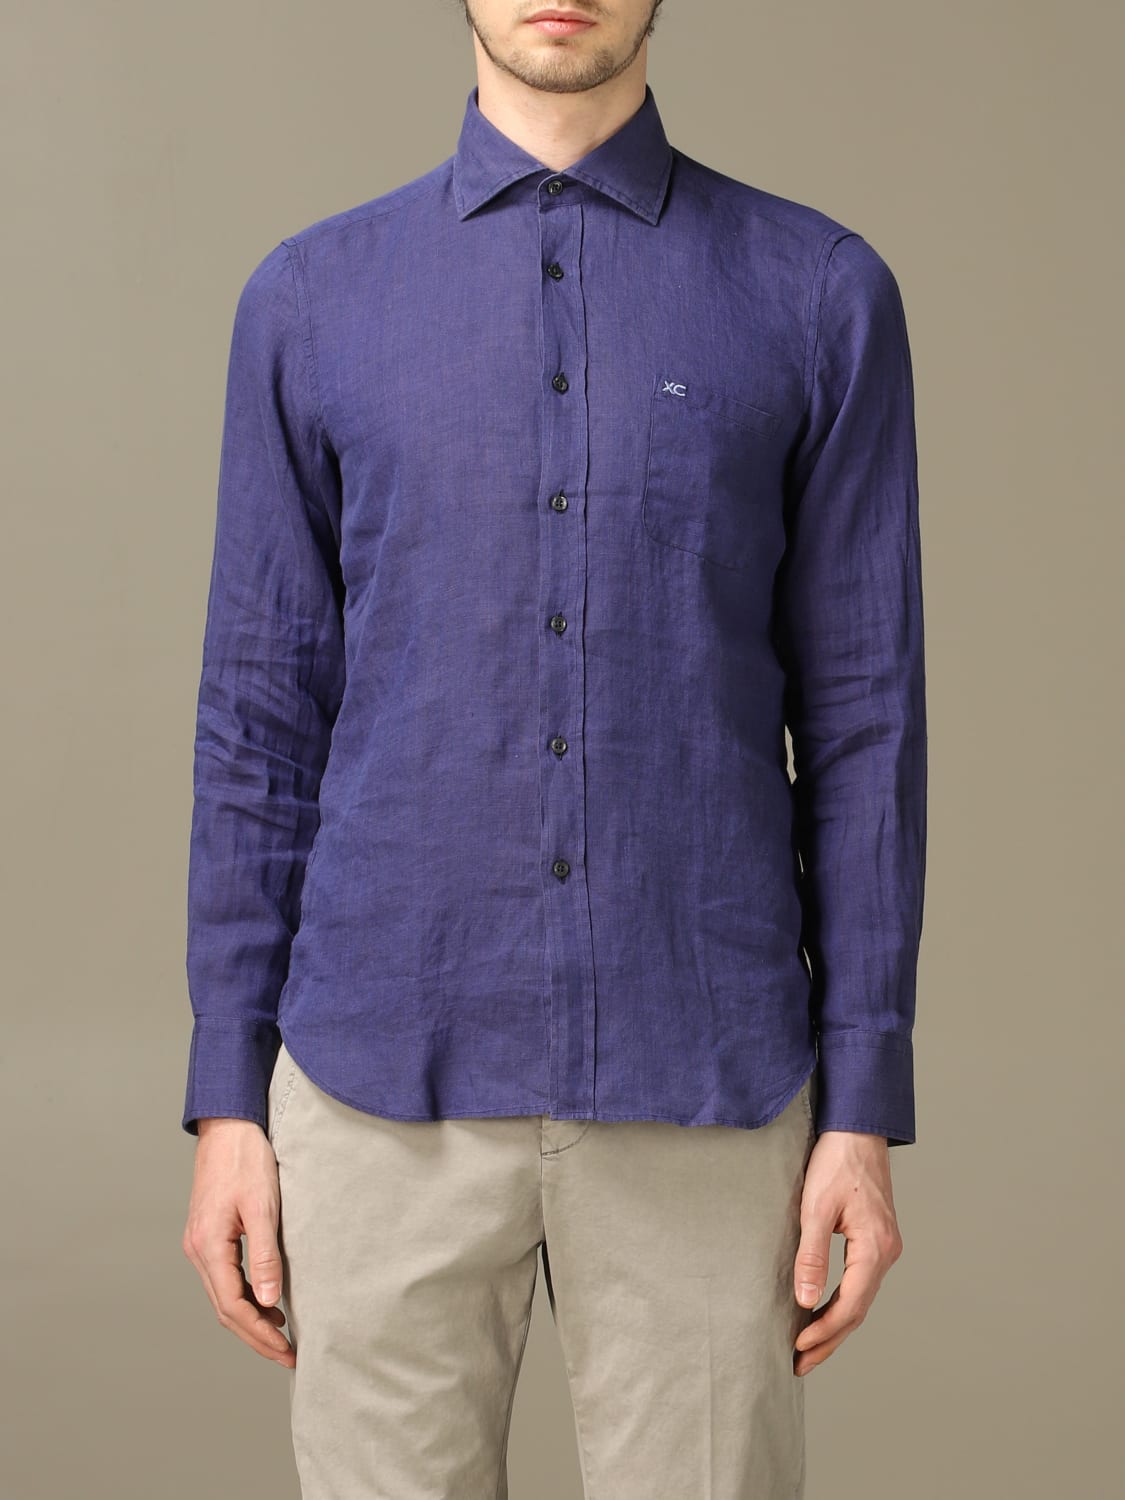 Xc -  linen shirt with Italian collar